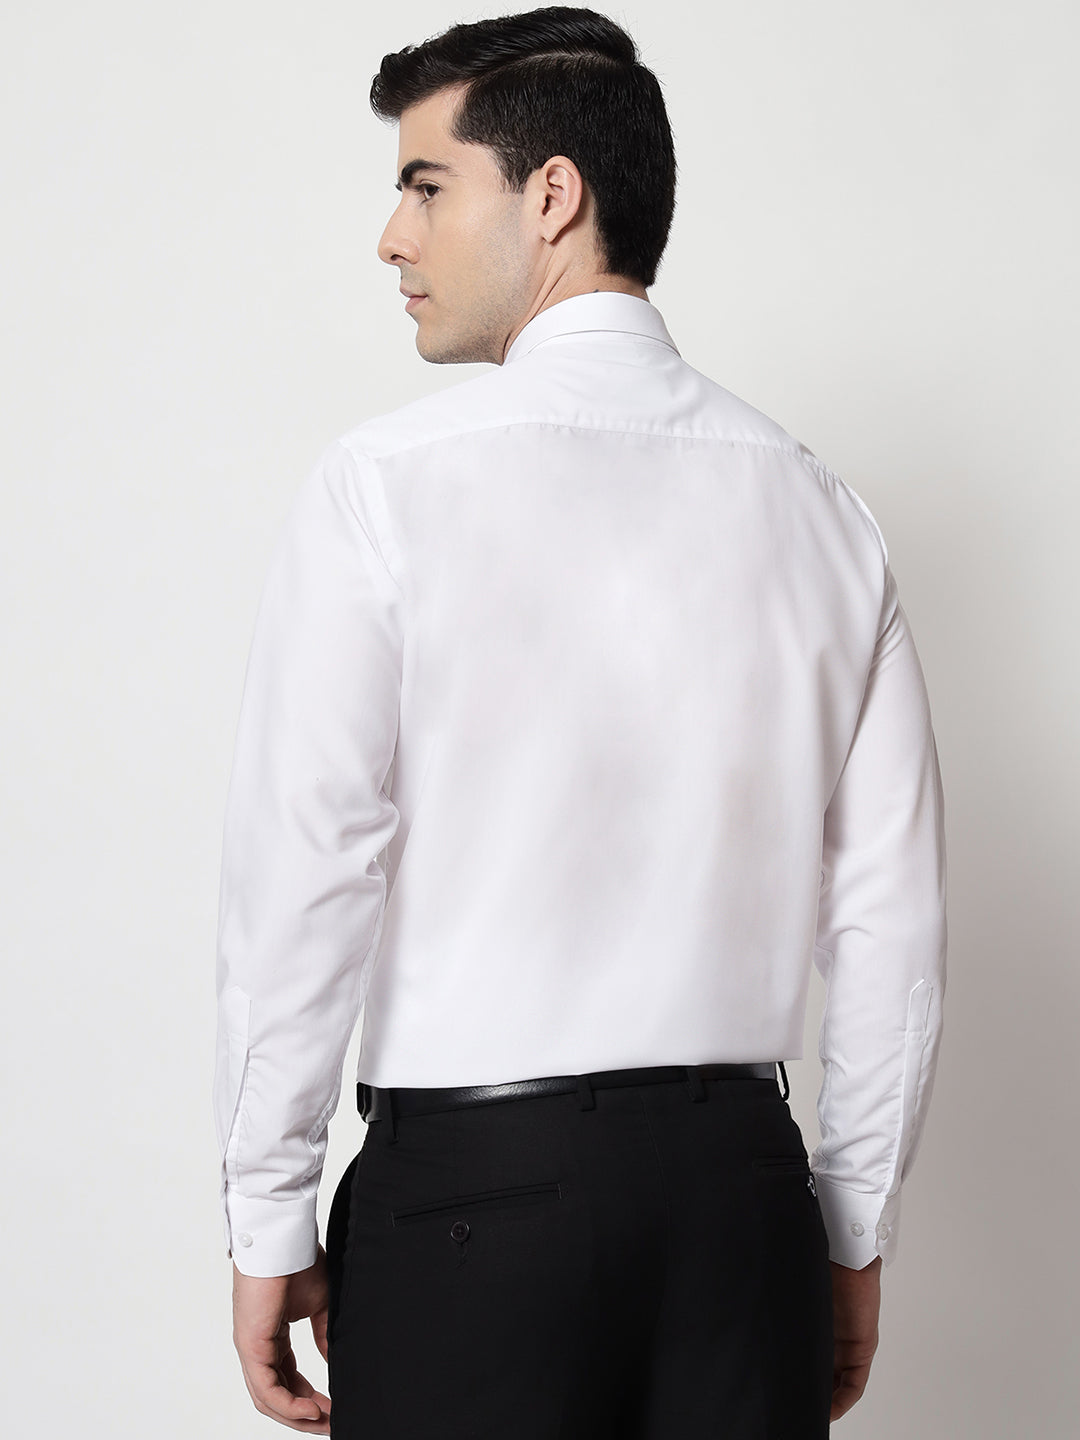 Black & White Men's Formal Cufflink Shirt White-1